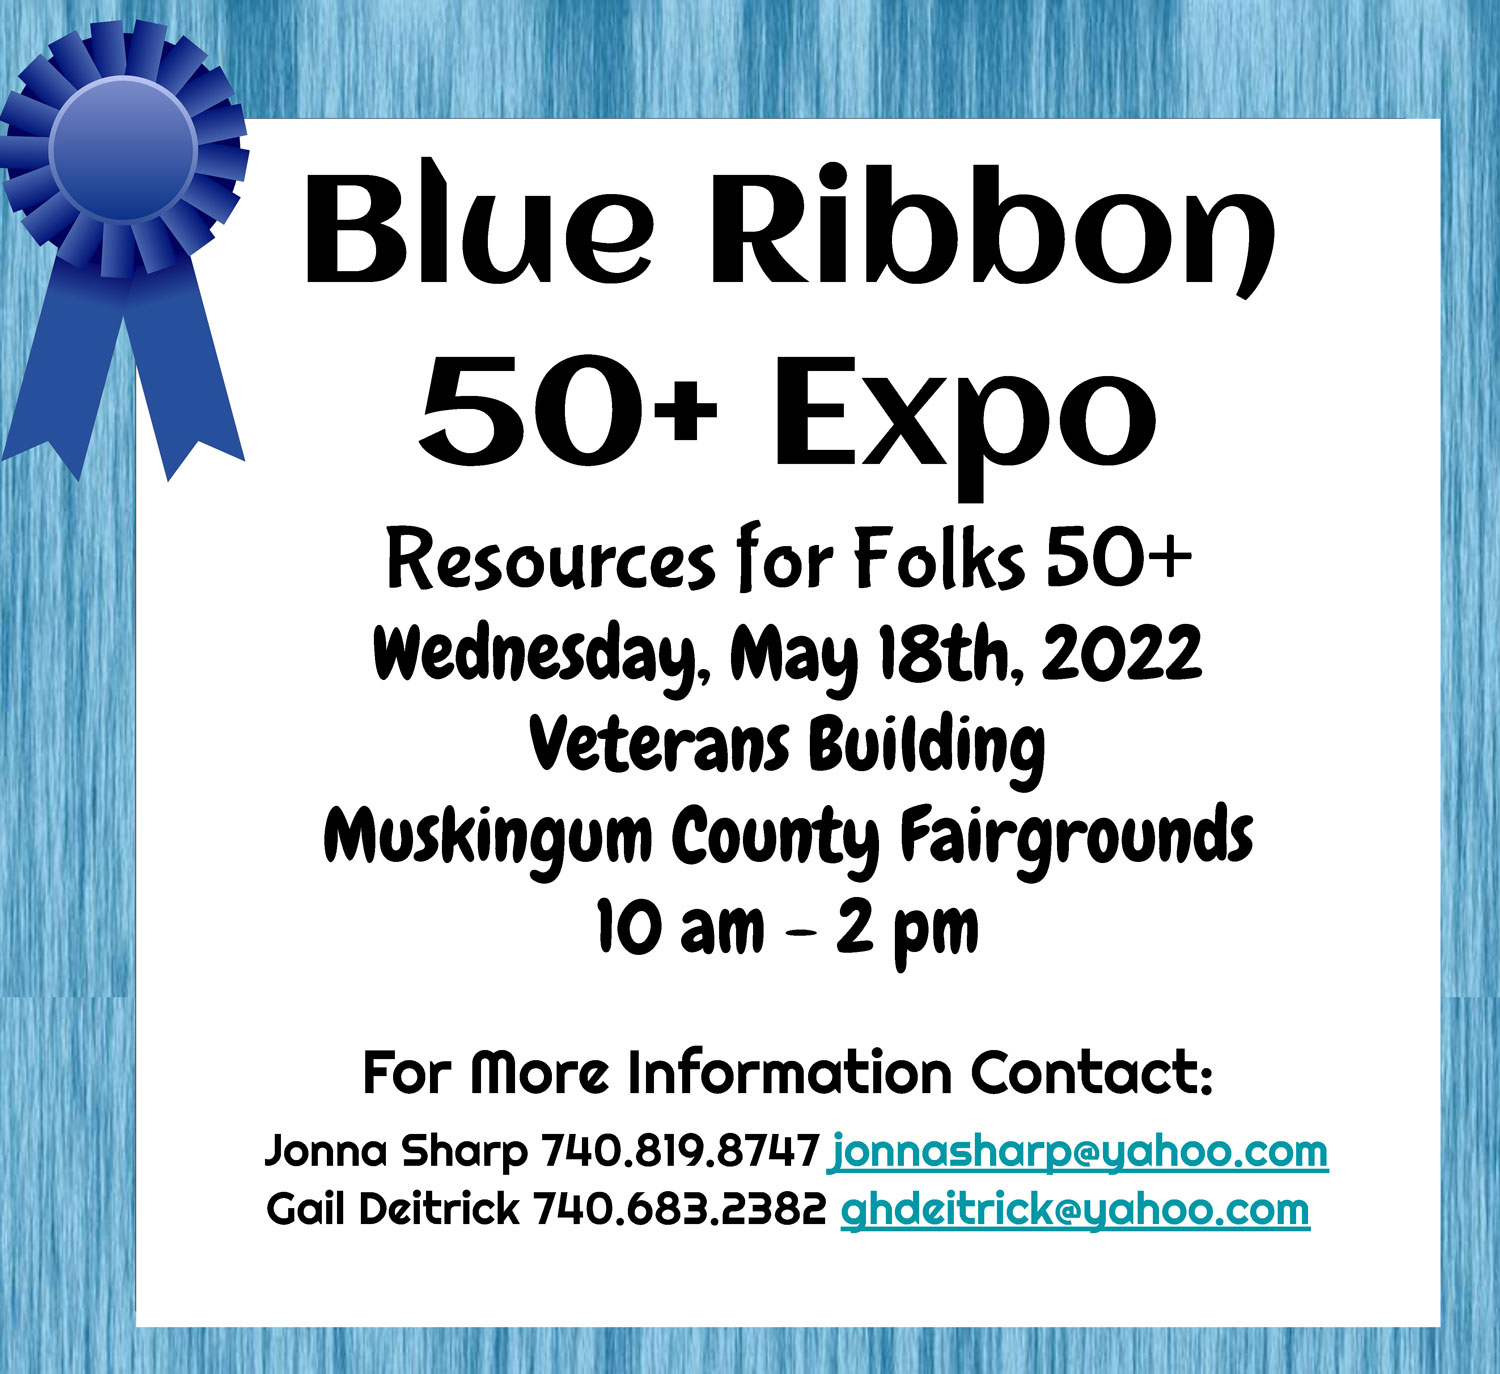 Blue Ribon 50+ Expo